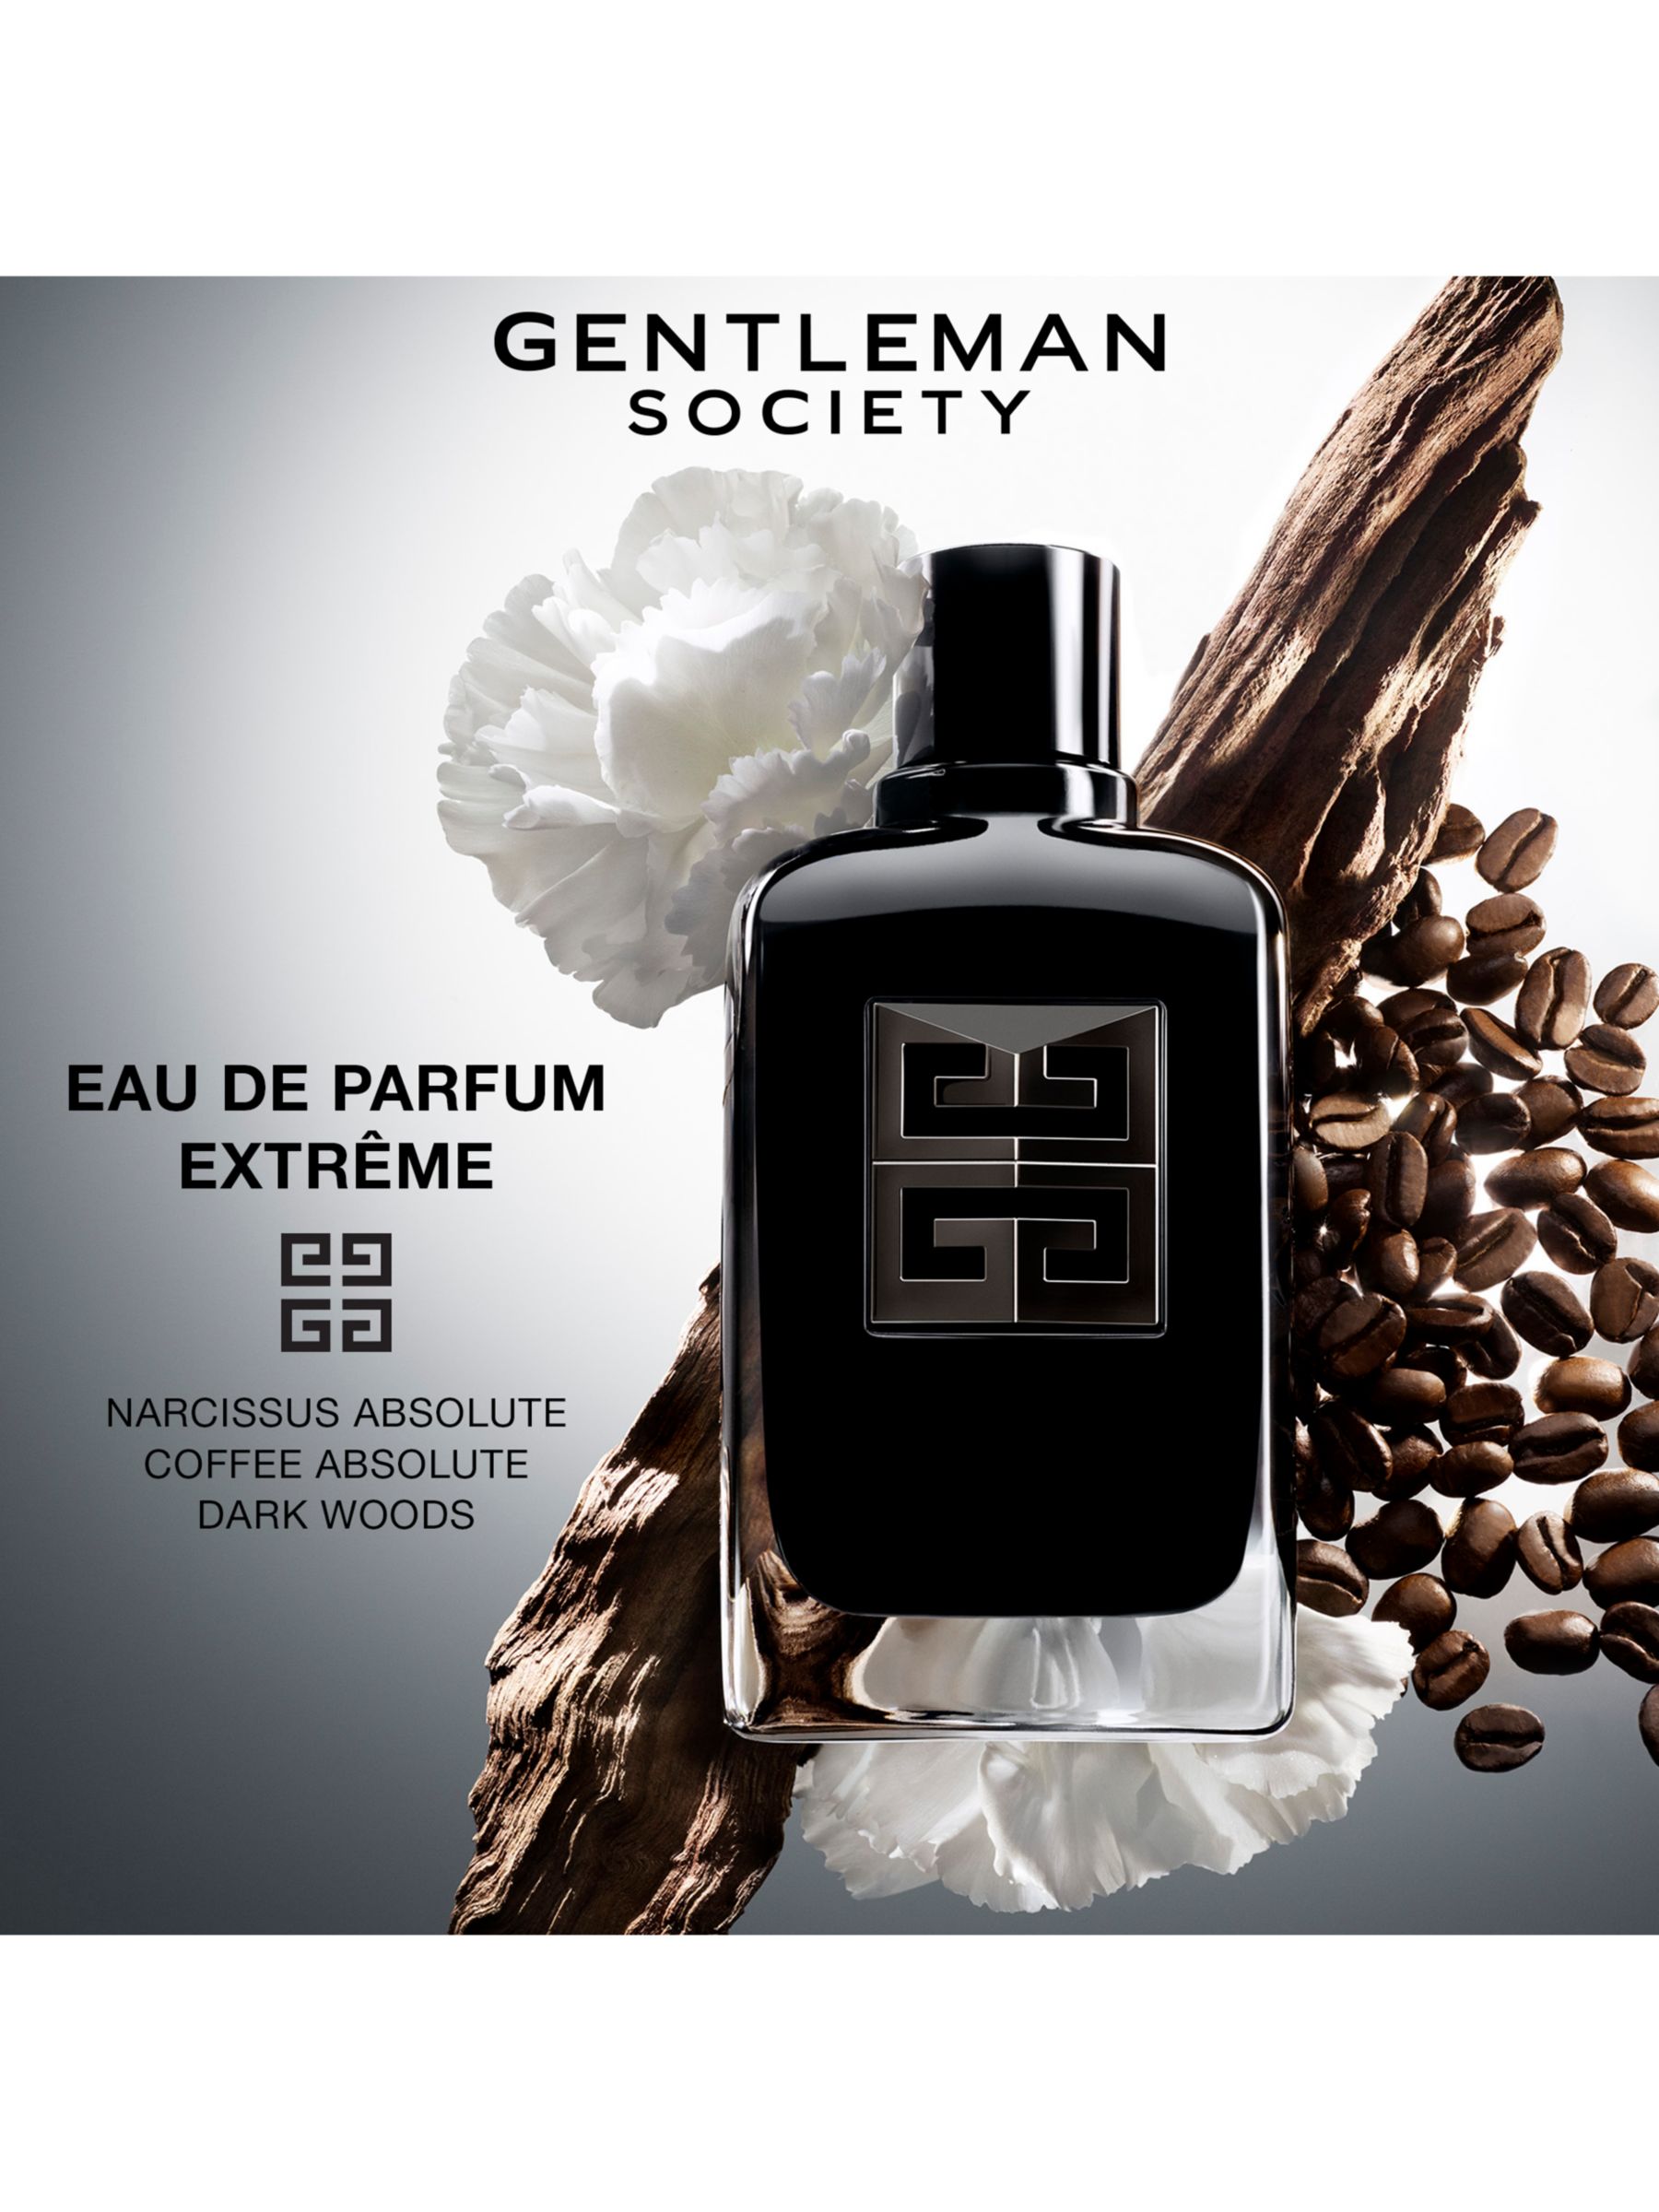 Givenchy	Gentleman Society Eau de Parfum Extrême, 60ml